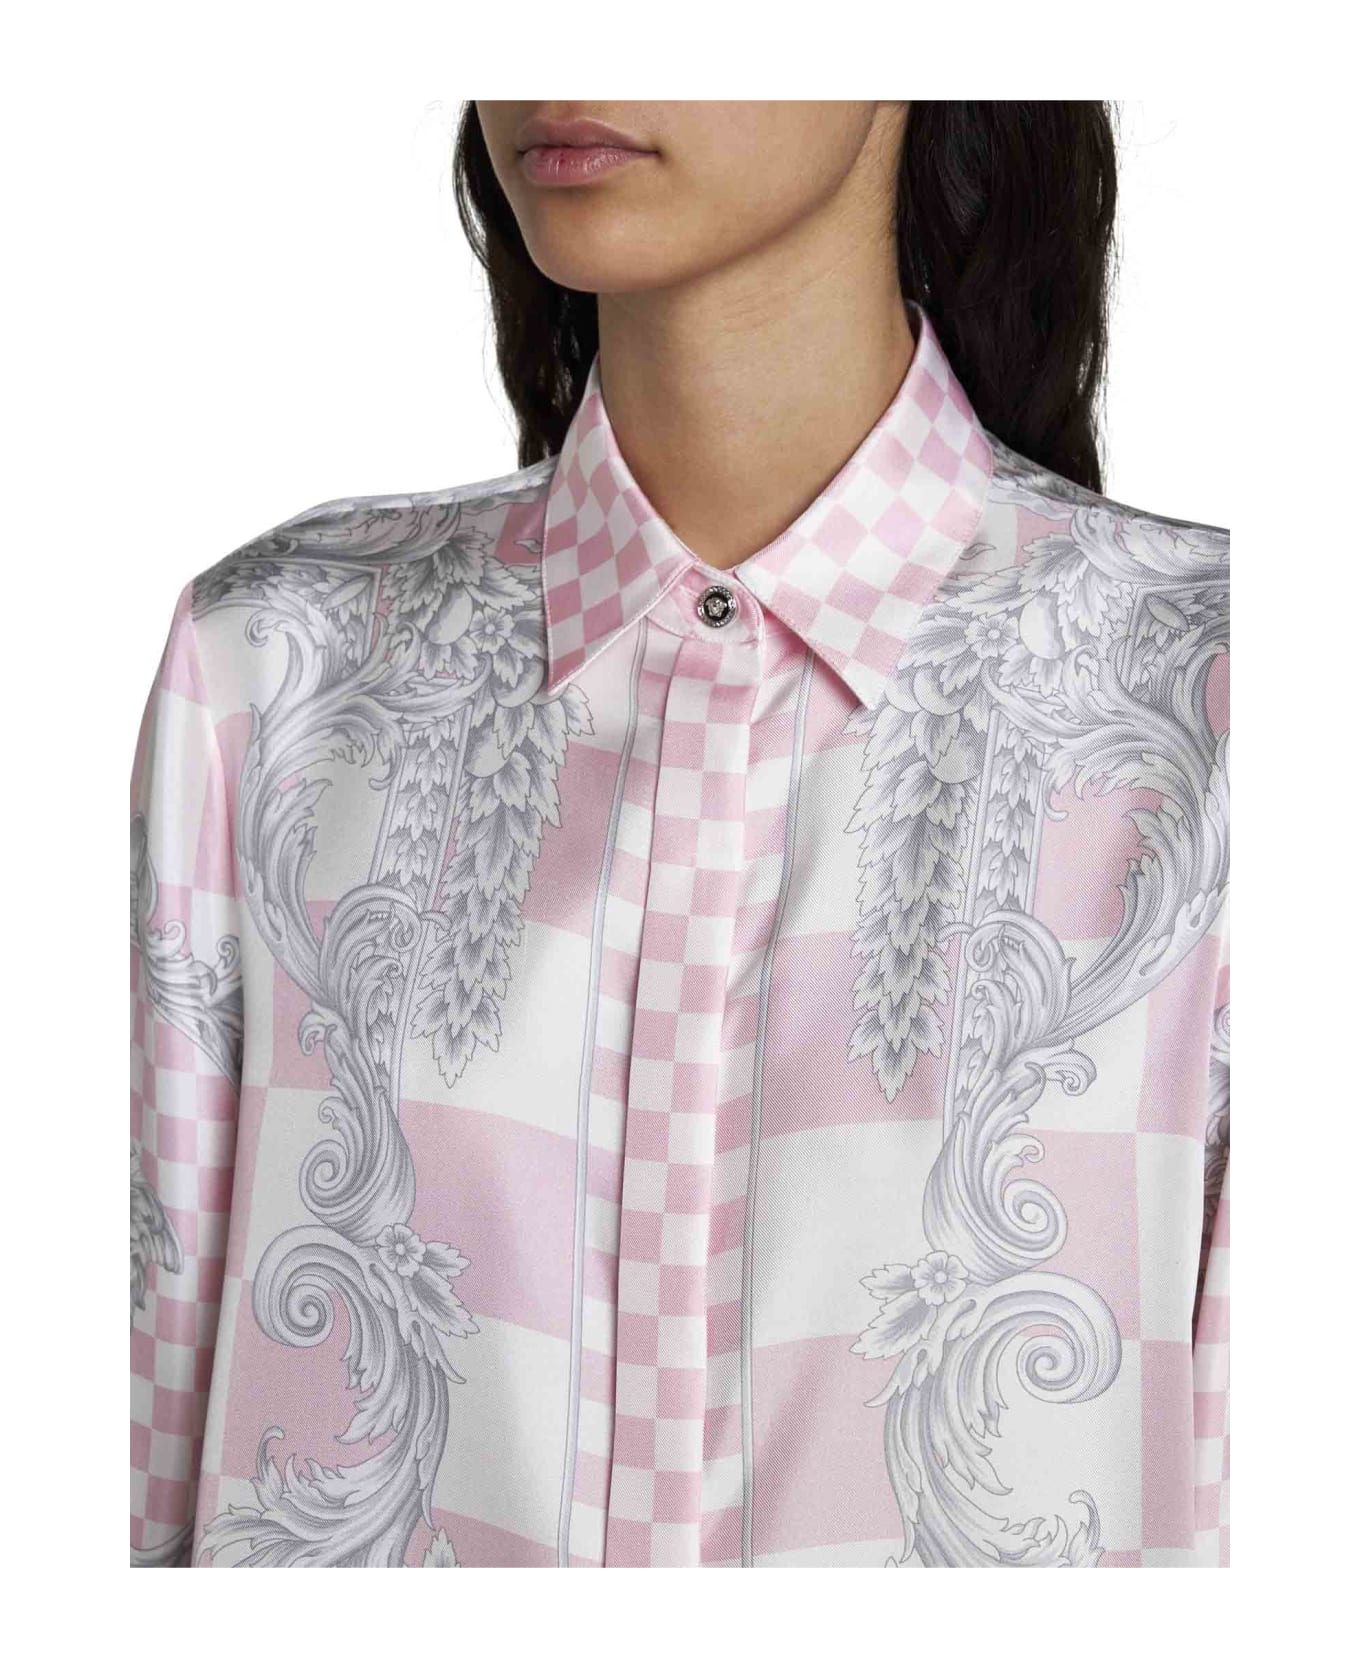 Versace Silk Medusa Contrast Shirt - Pastel pink + white + silver